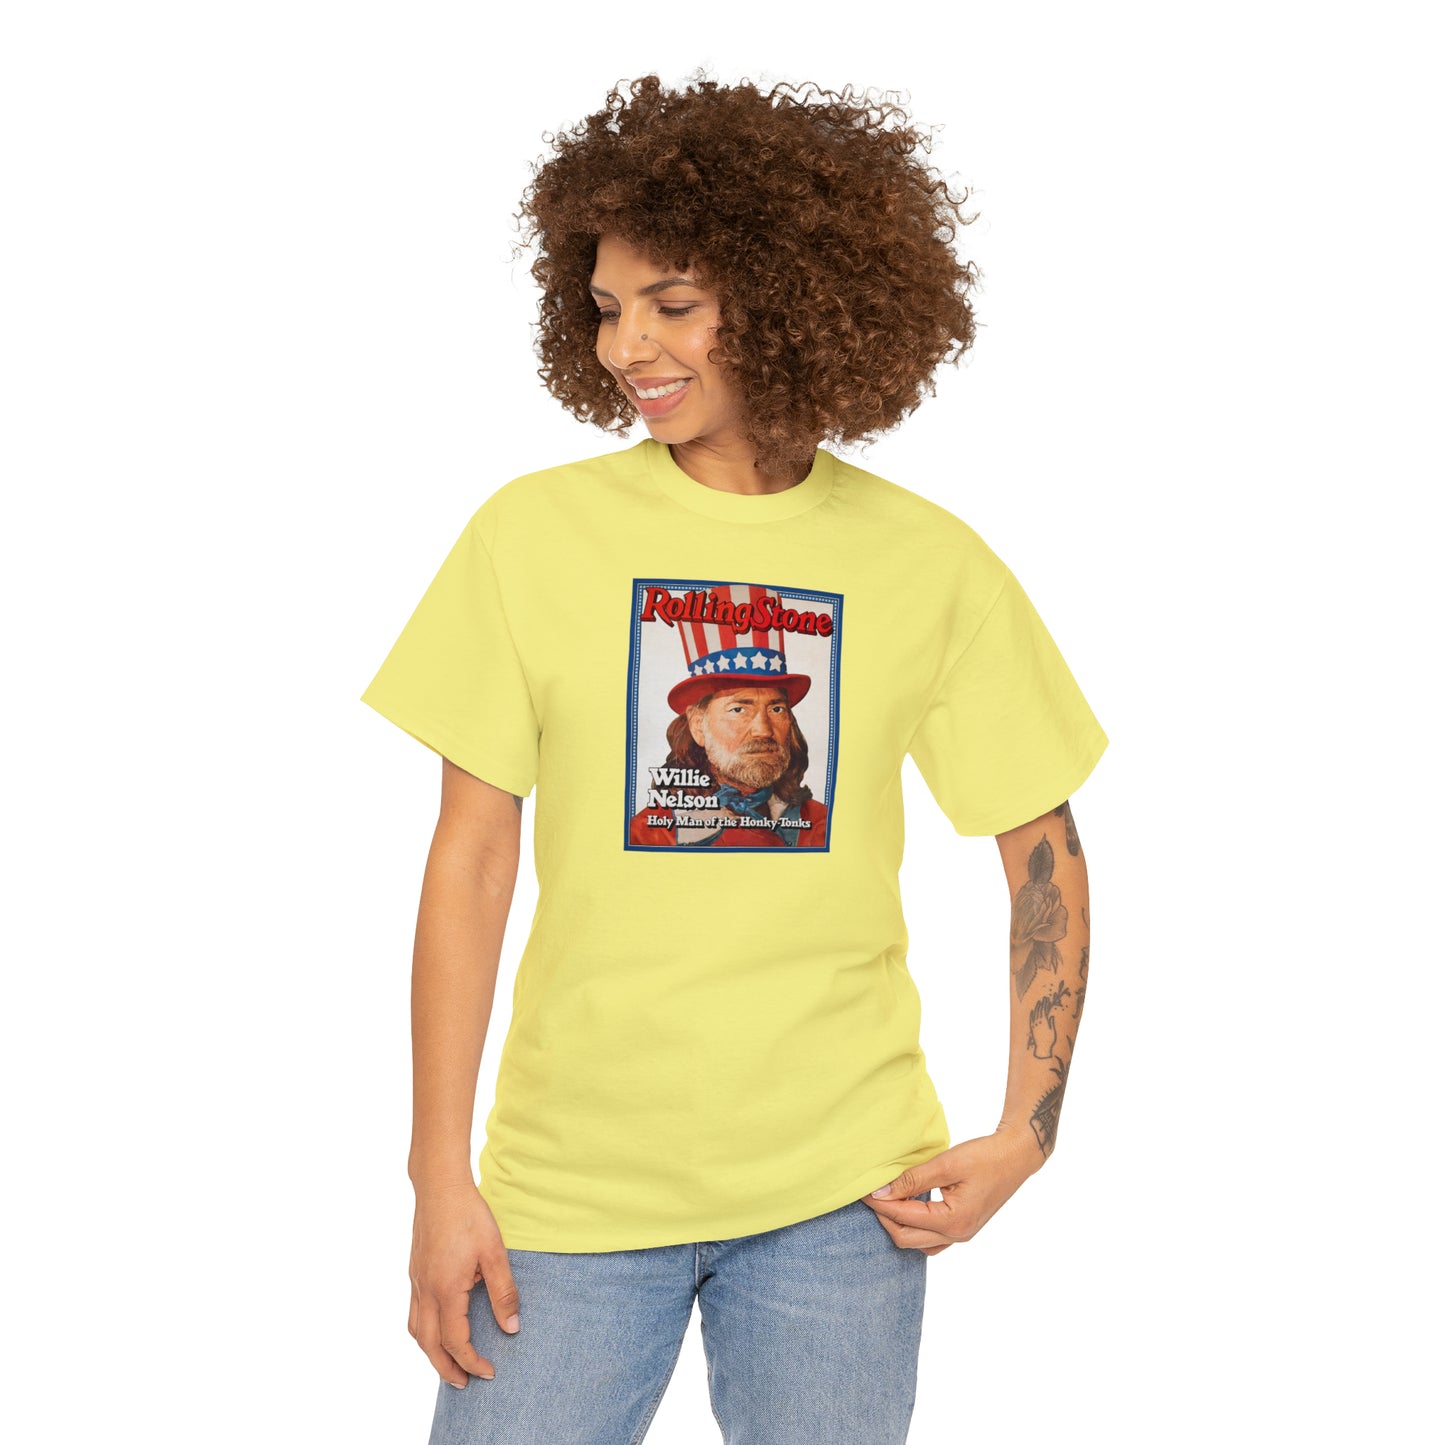 Willie Nelson T-Shirt